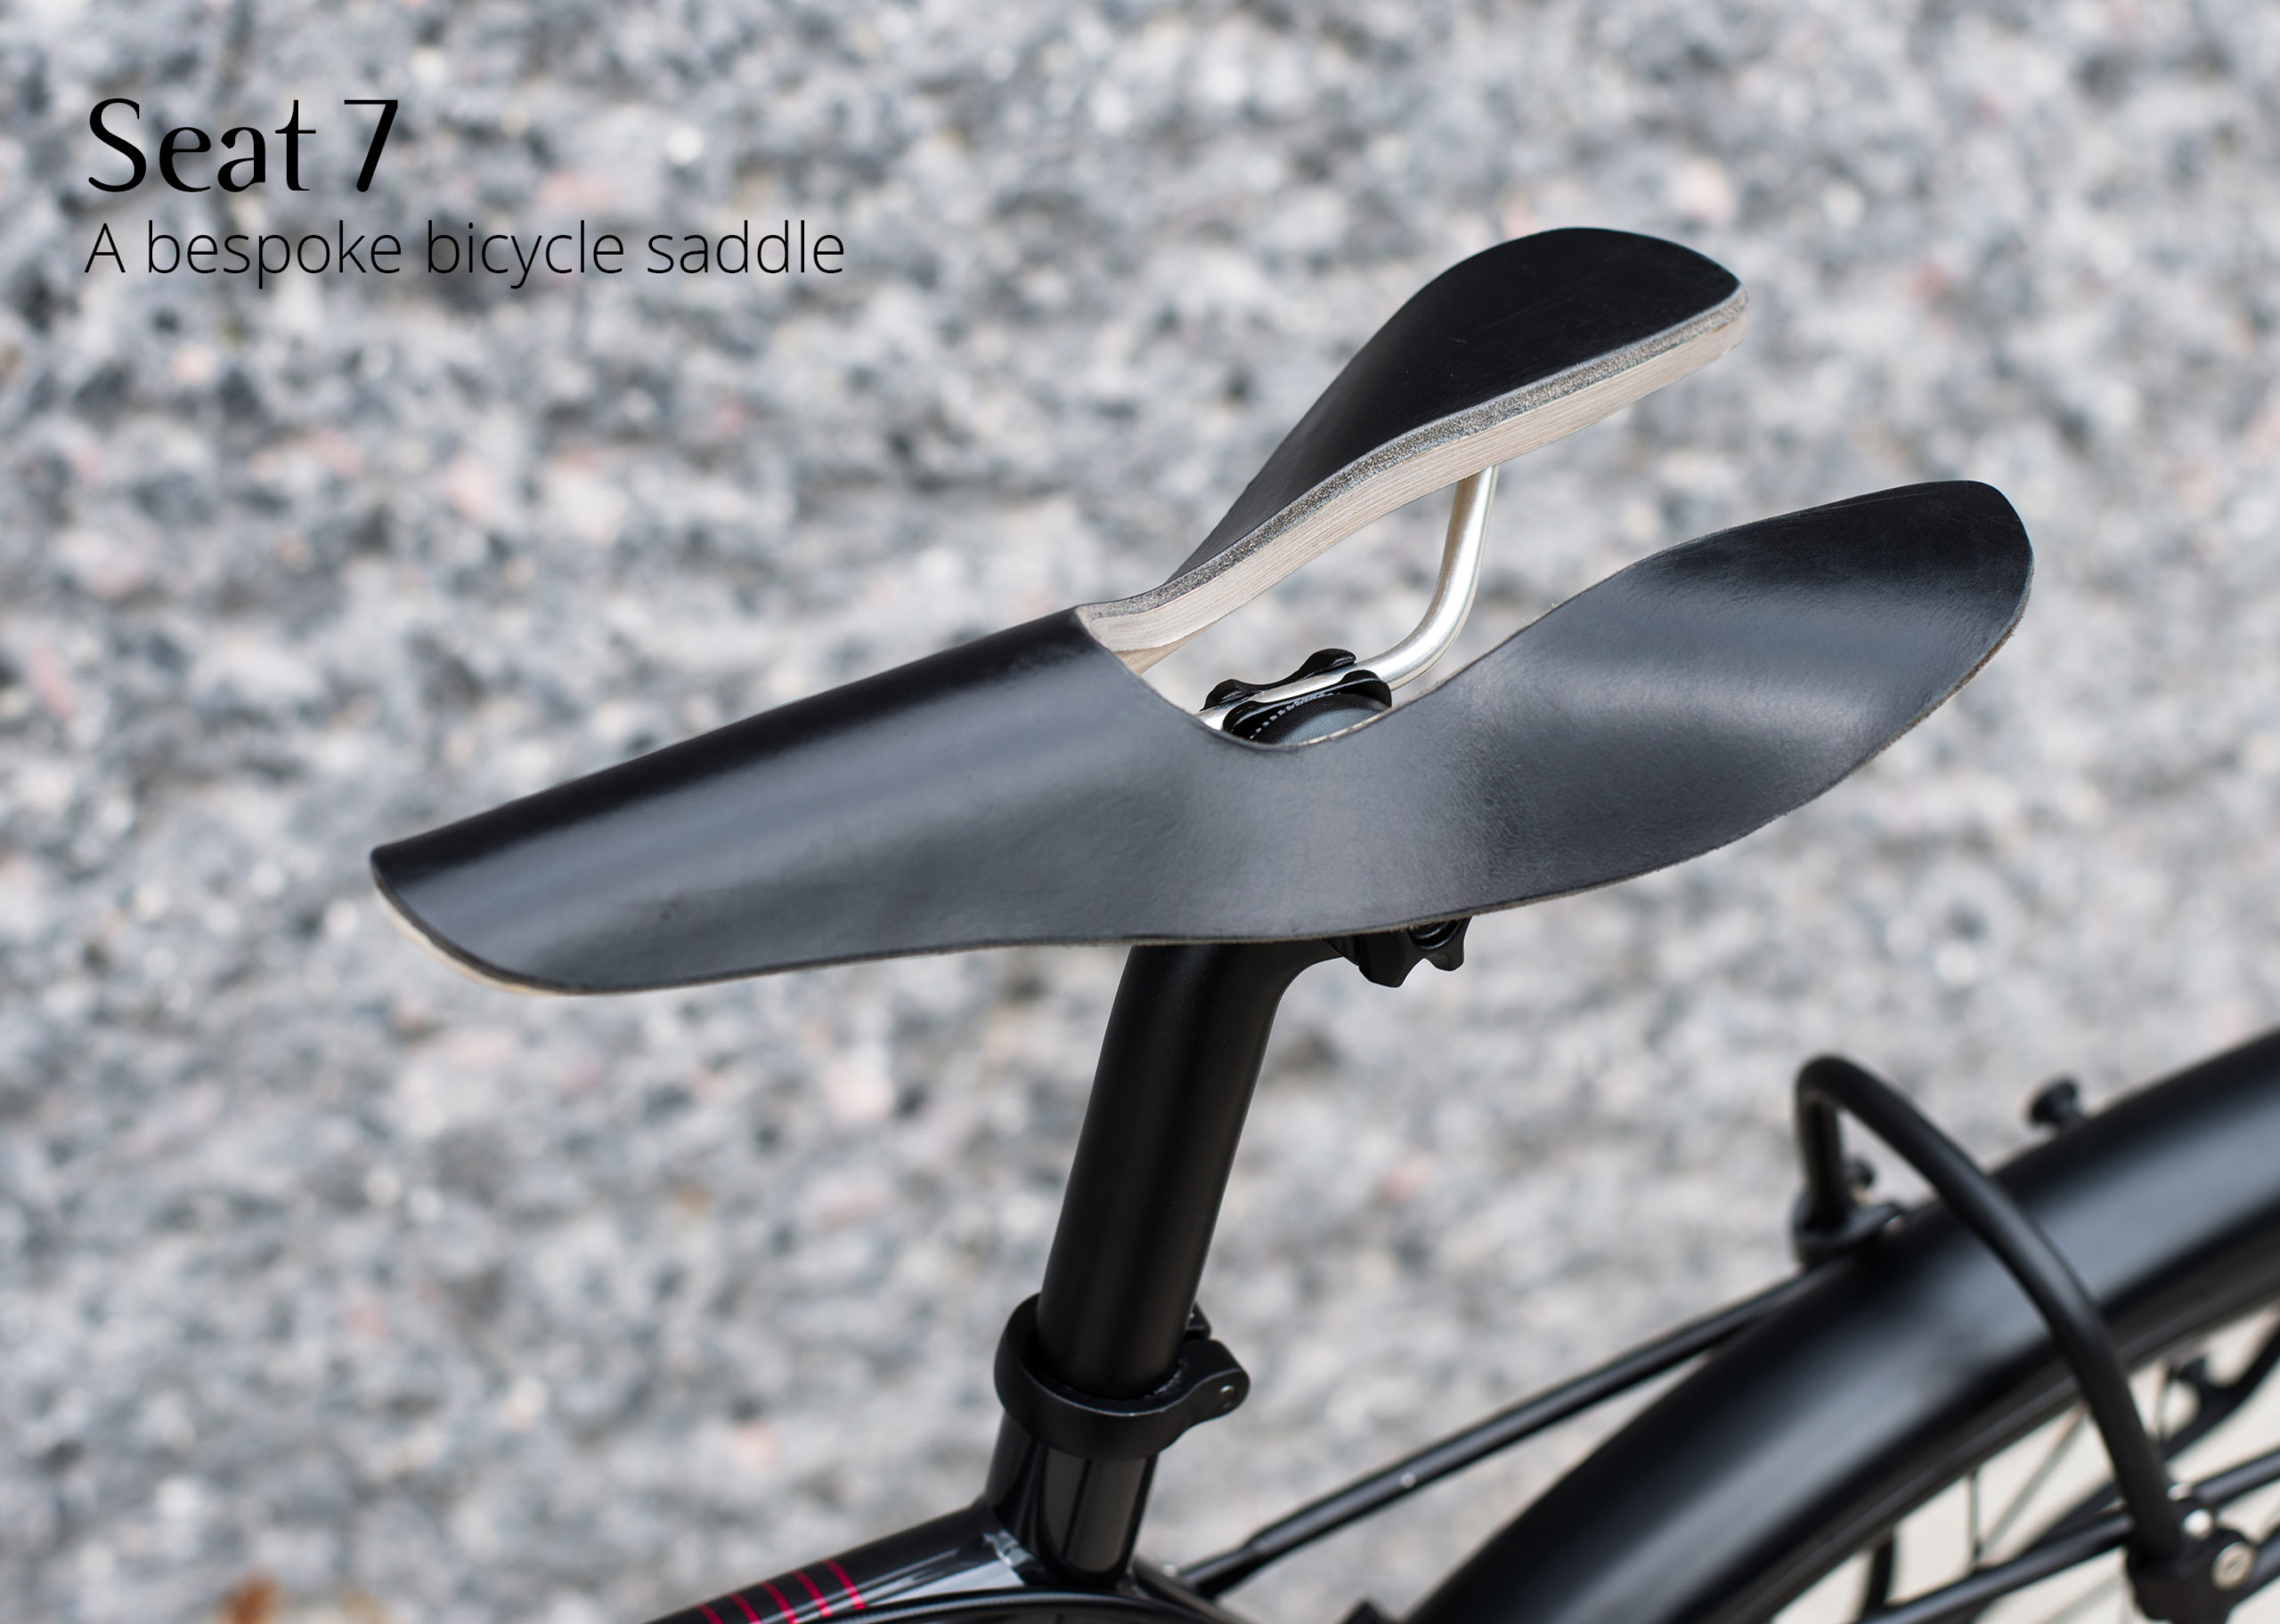 Seat7 – A bespoke bicycle saddle